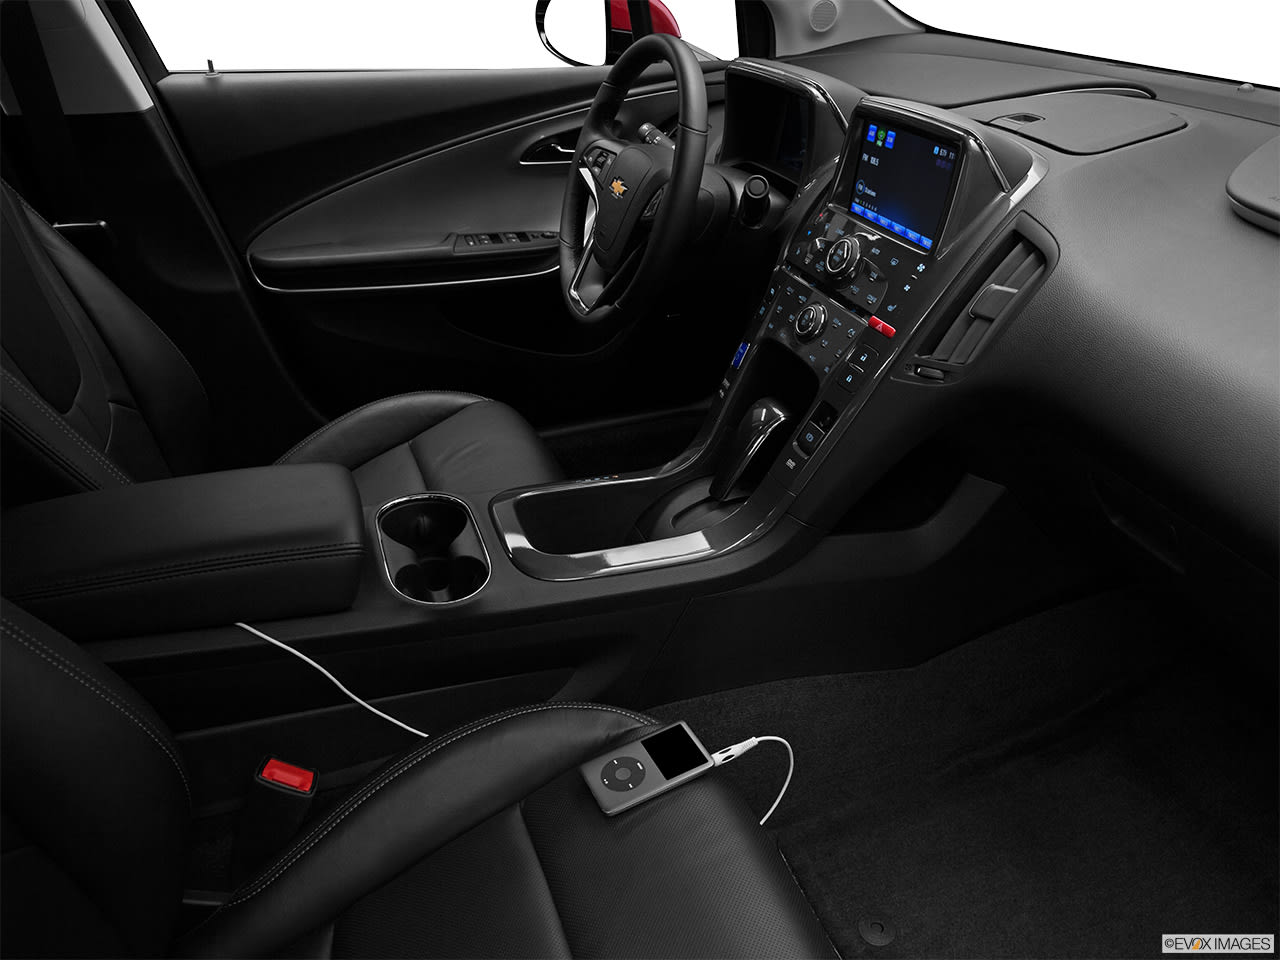 Chevrolet Volt 2012 interior